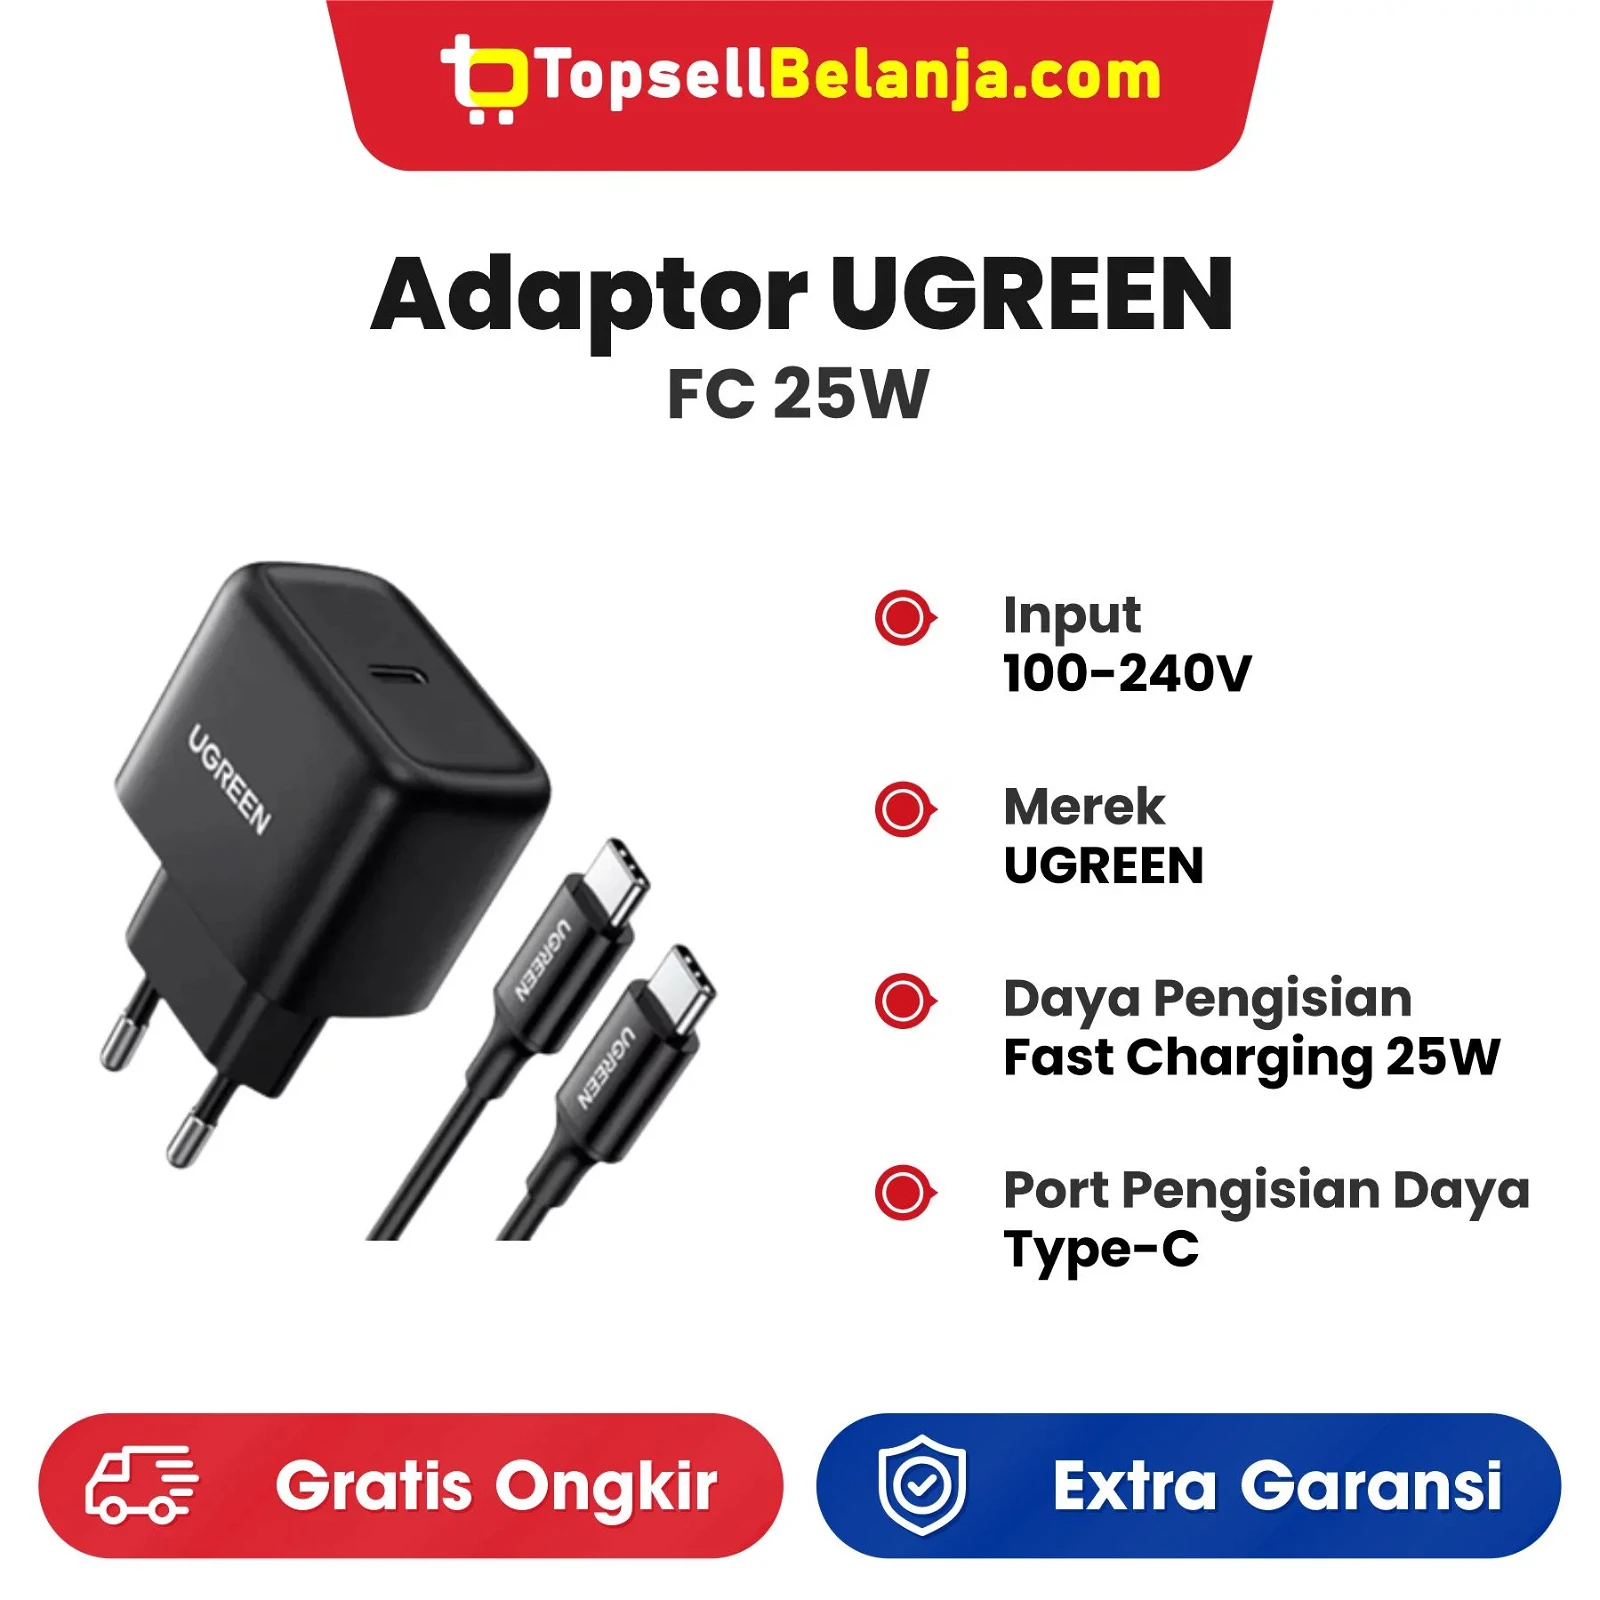 Adaptor Ugreen FC 25W - TOPSELL